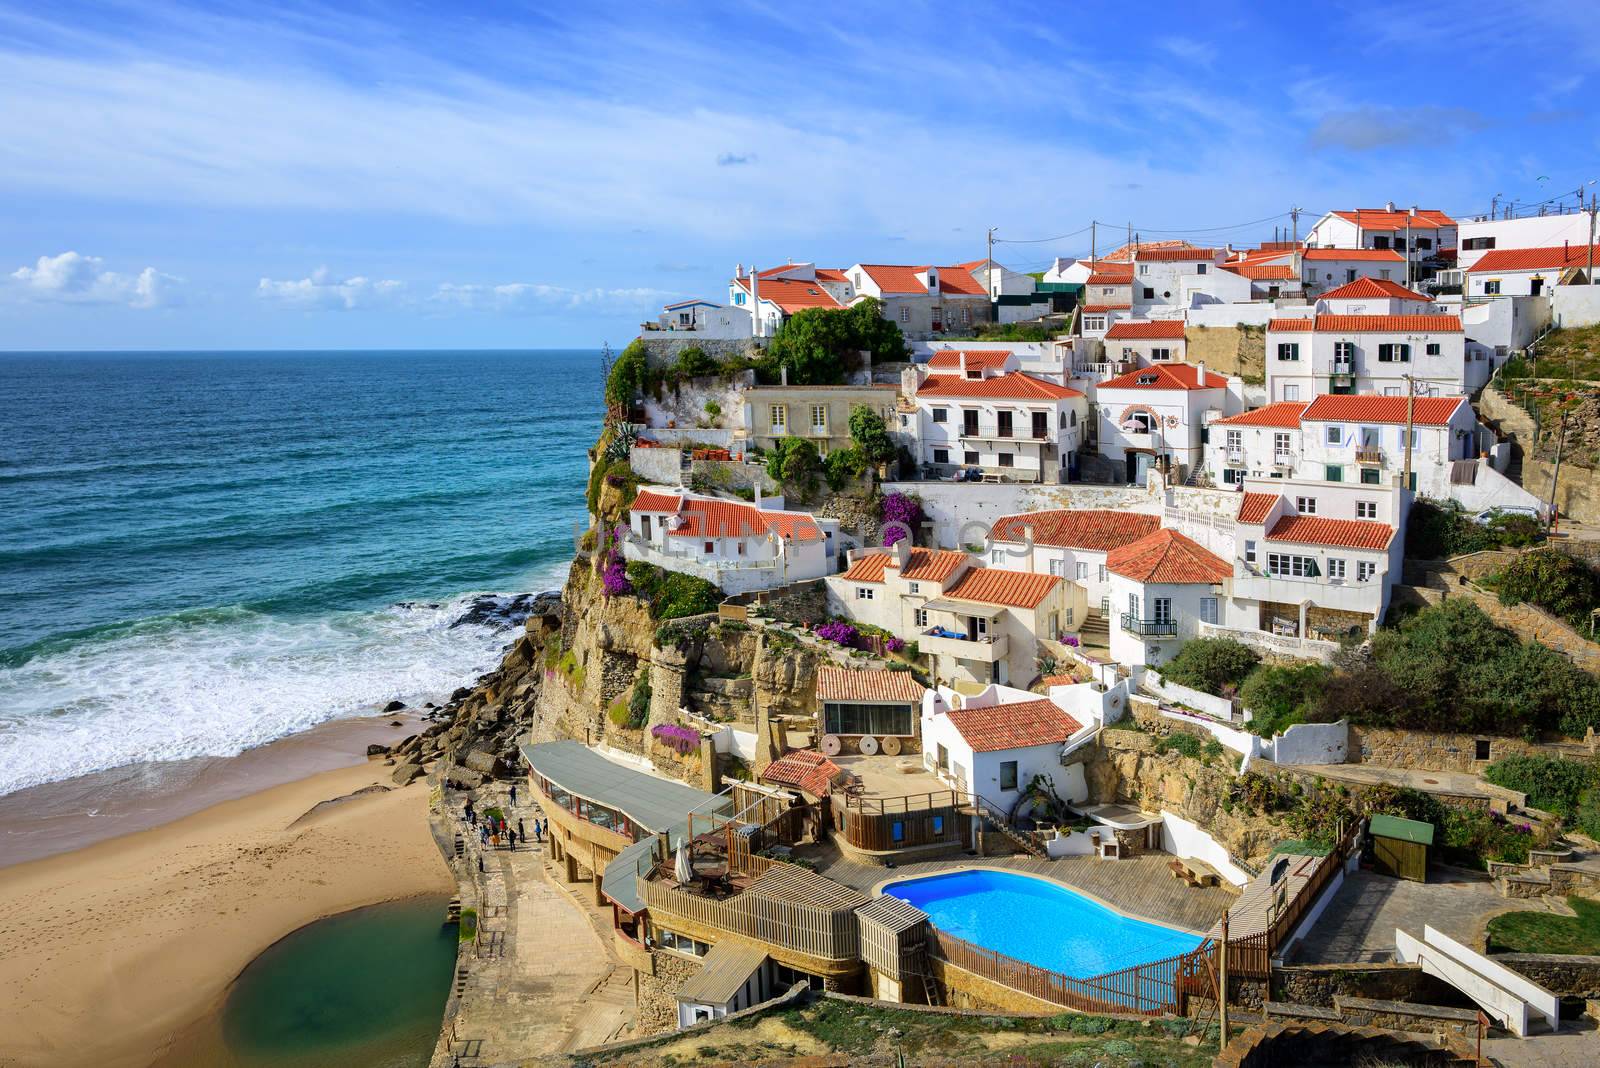 Azenhas do Mar, Sintra, Portugal by GlobePhotos